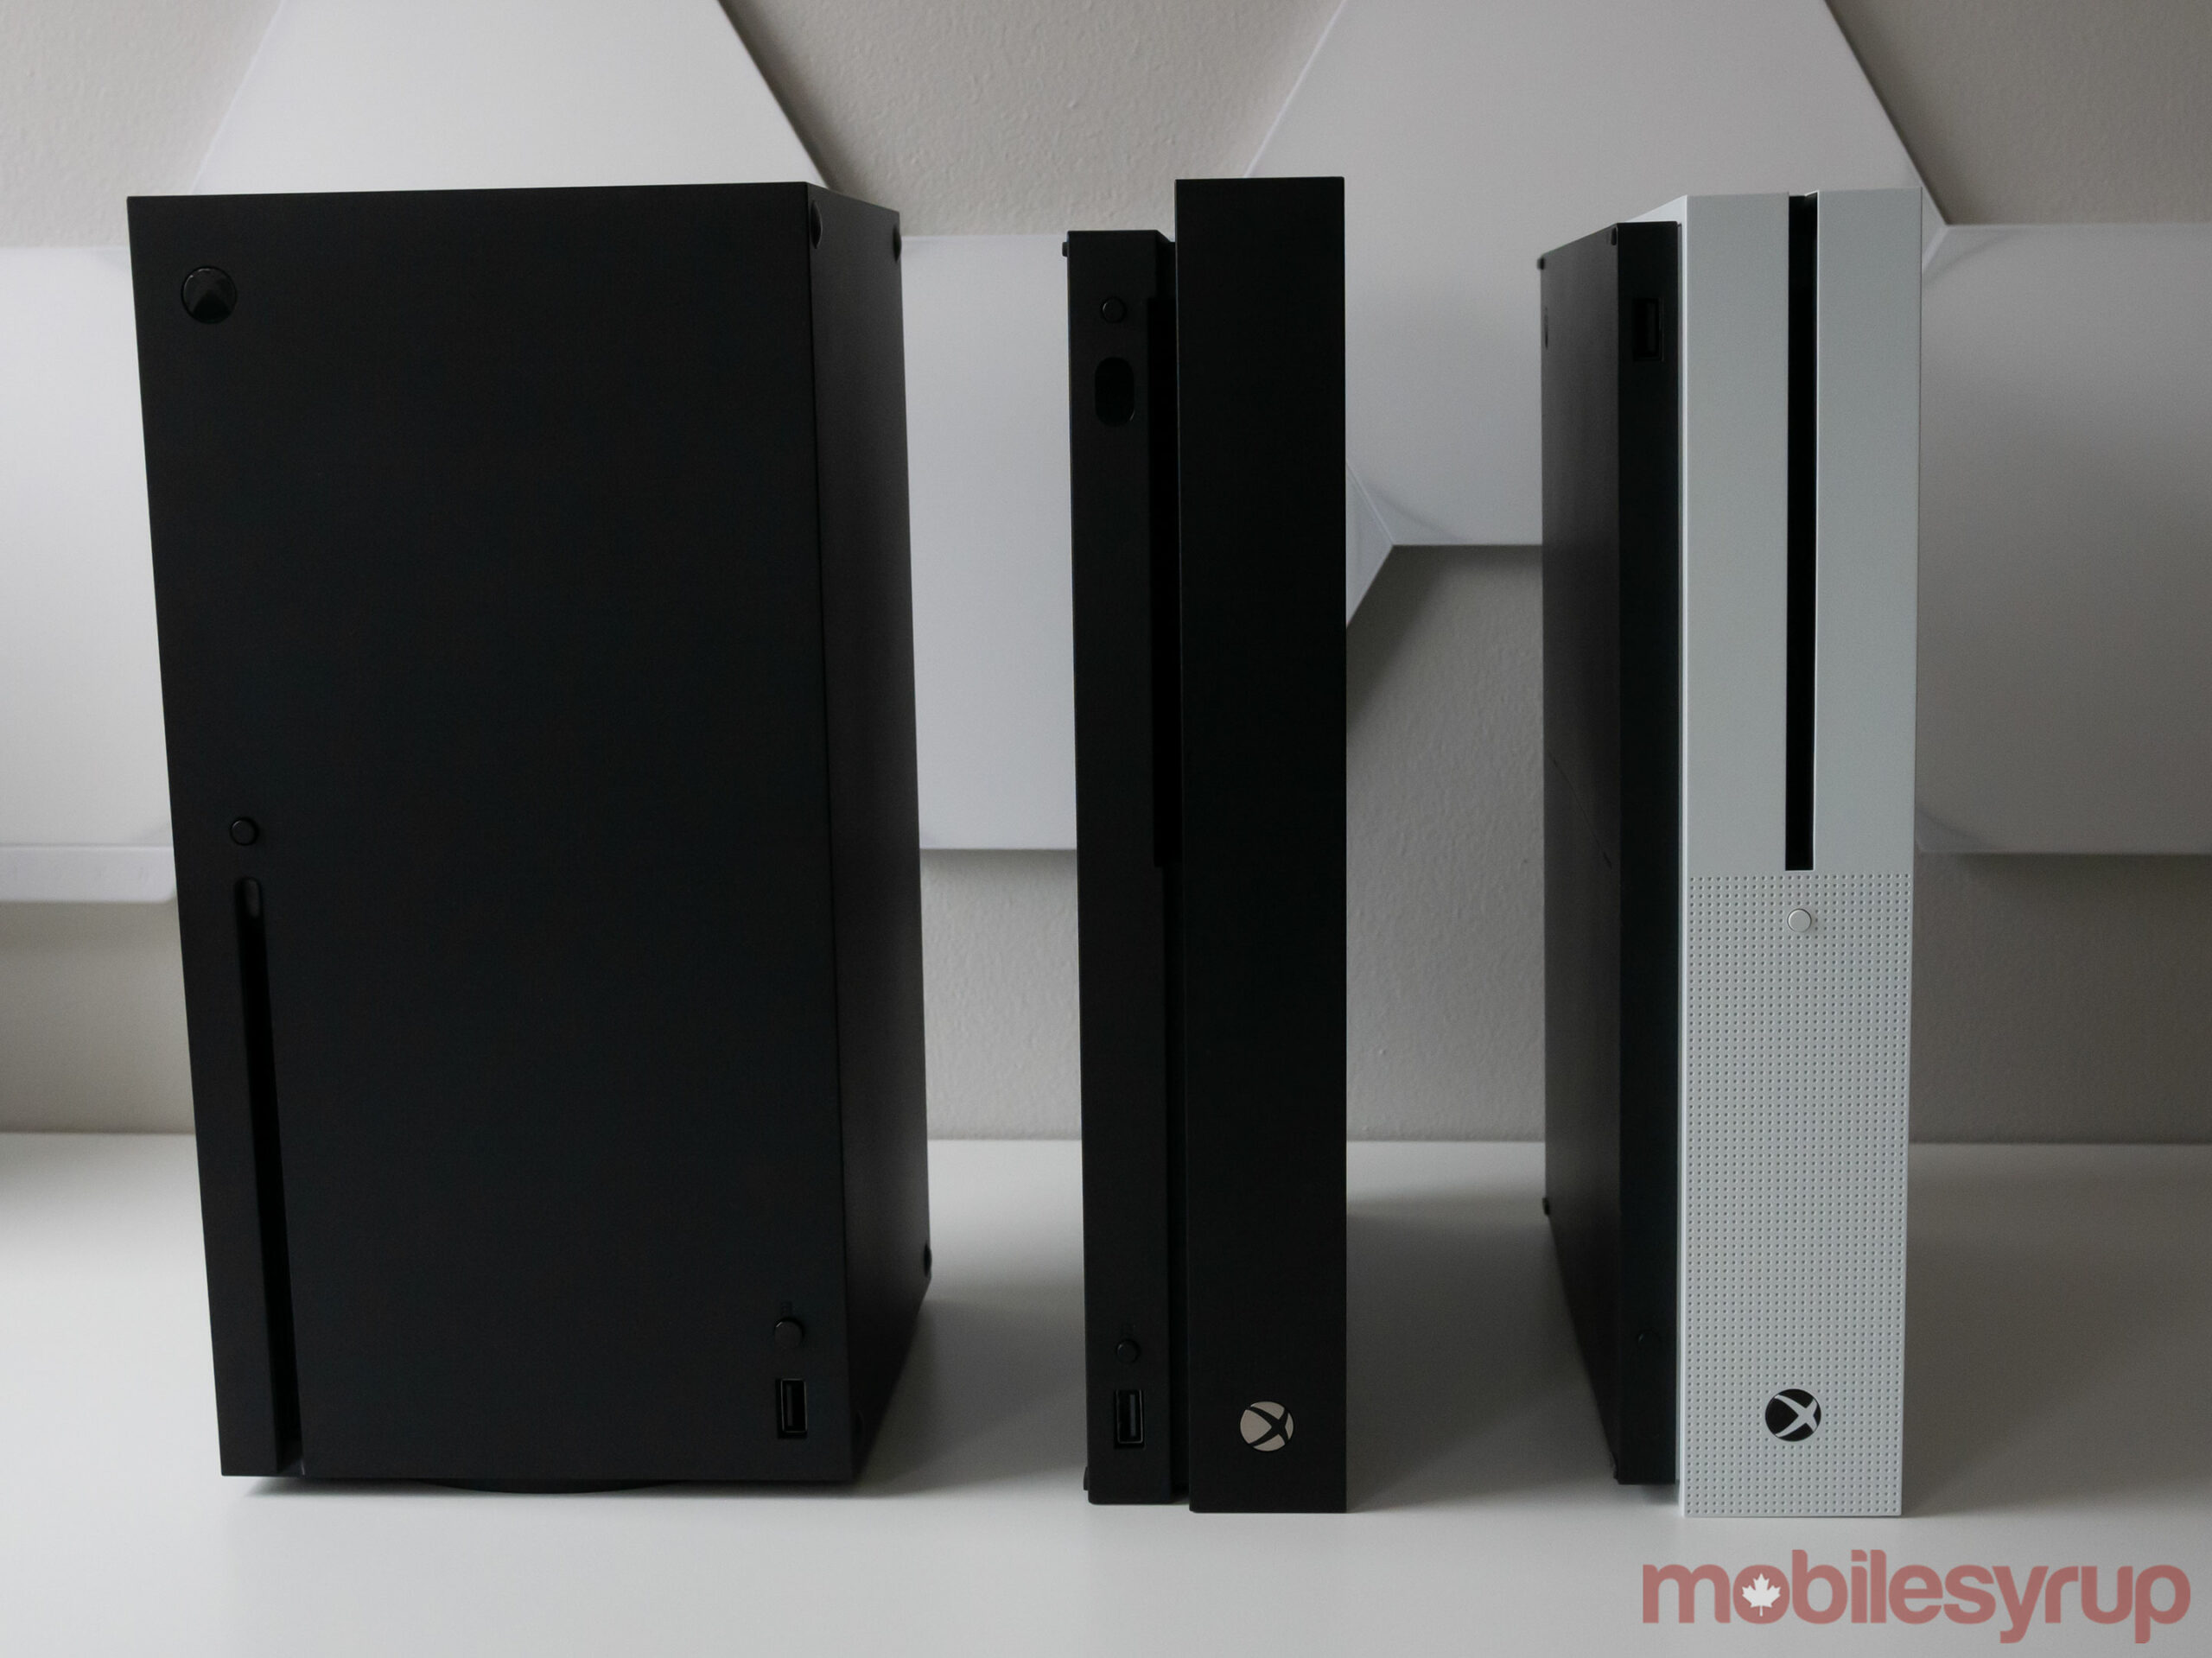 Xbox Series X, Xbox One X and Xbox One X